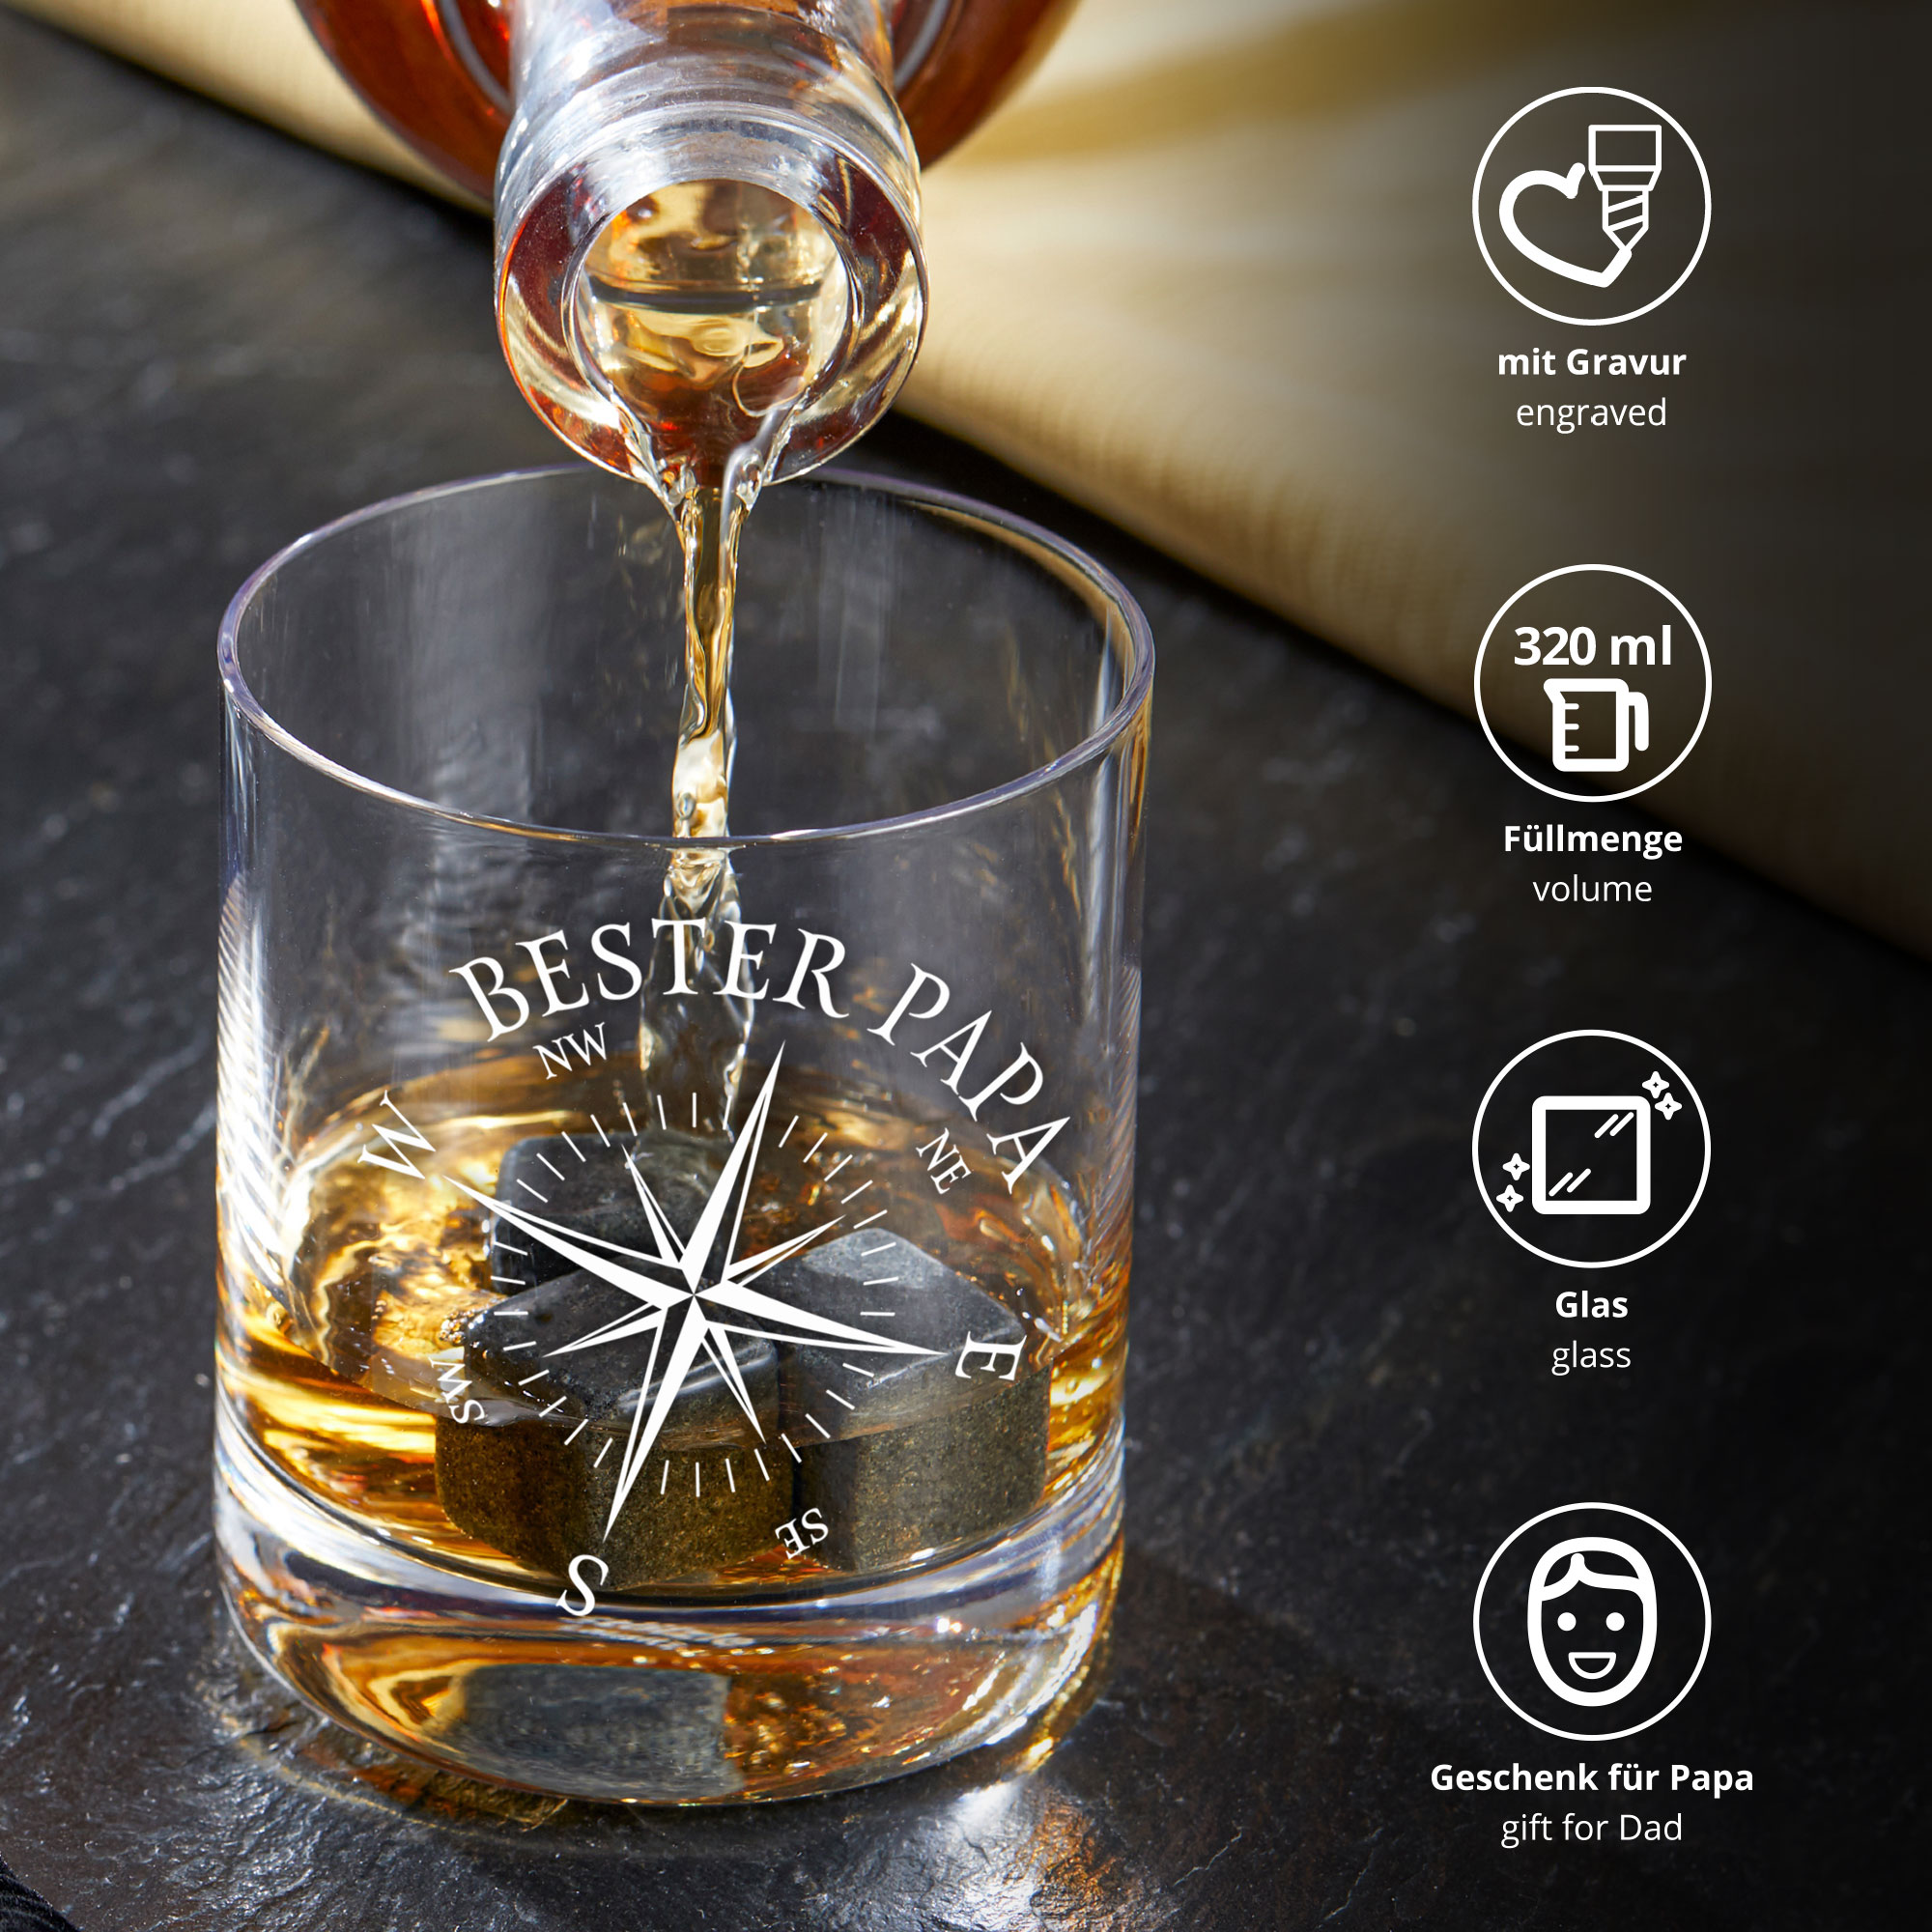 Whiskyglas mit Kompass Gravur - Bester Papa 0006-0003-DE-0003 - 3